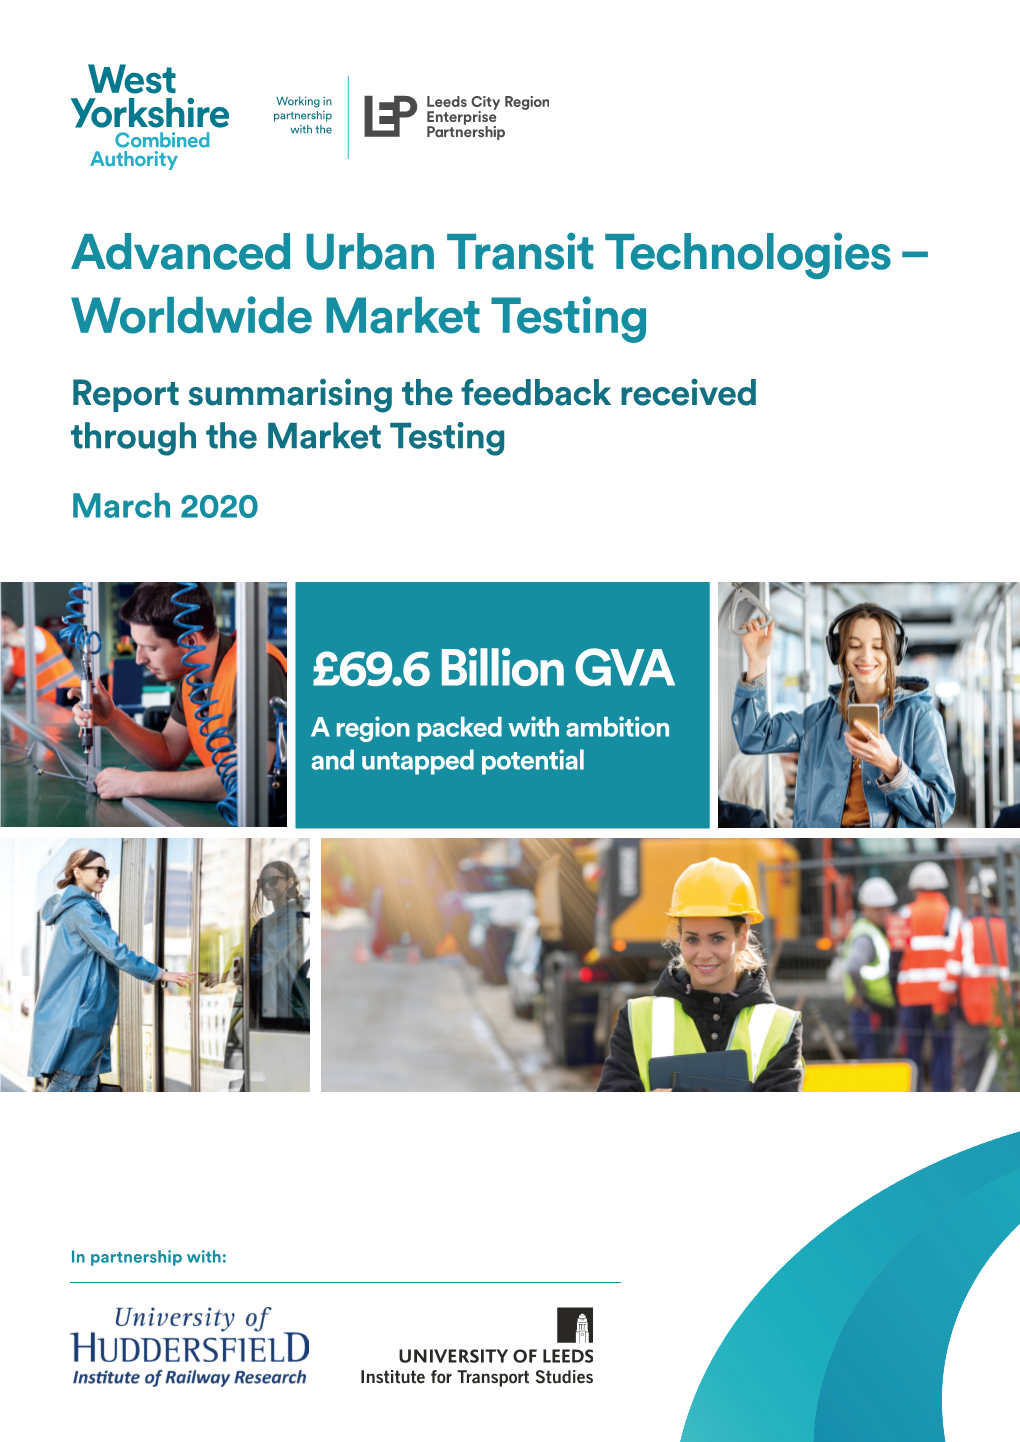 Advanced Urban Transit Technologies Market Testing Final Report